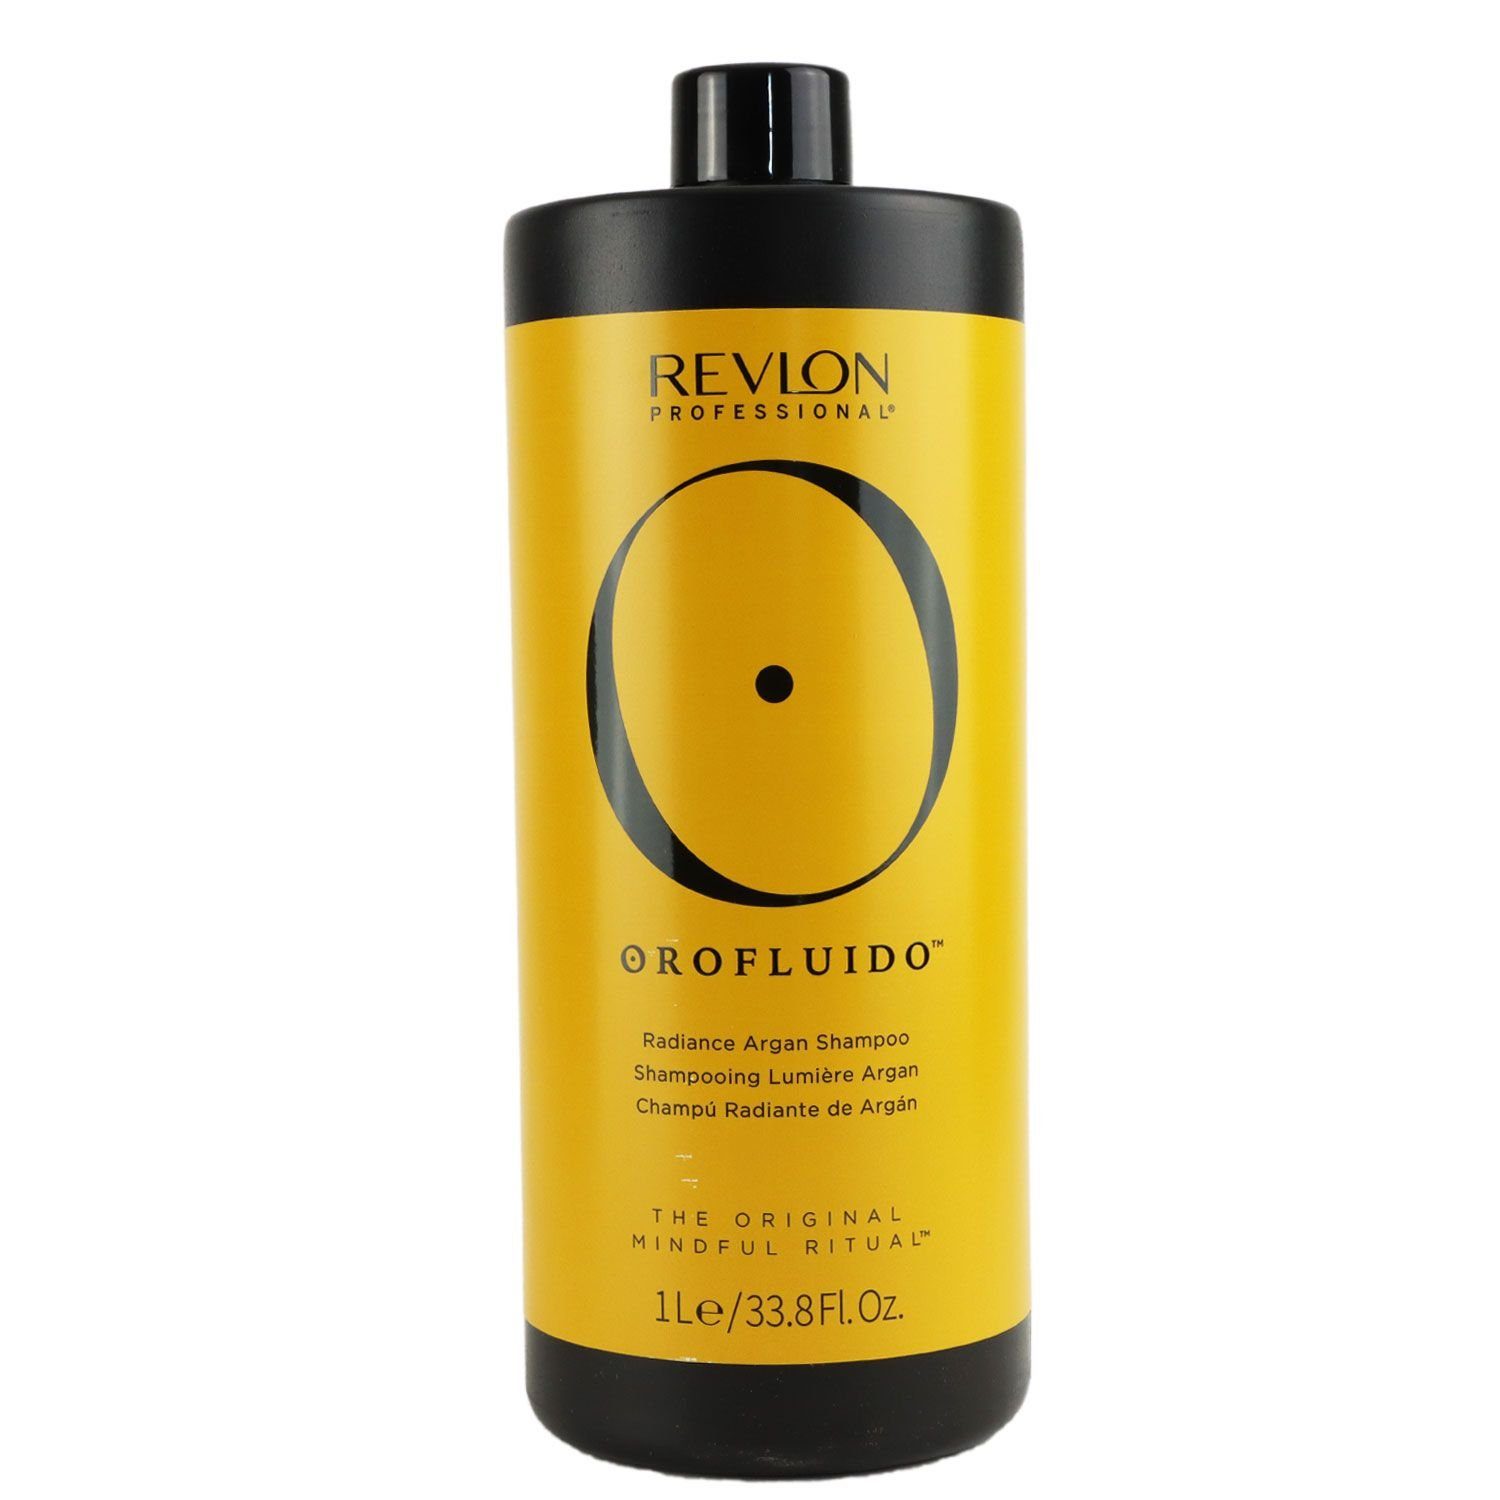 Argan PROFESSIONAL Orofluido Haarshampoo Vegan Shampoo 1000 ml, REVLON Radiance